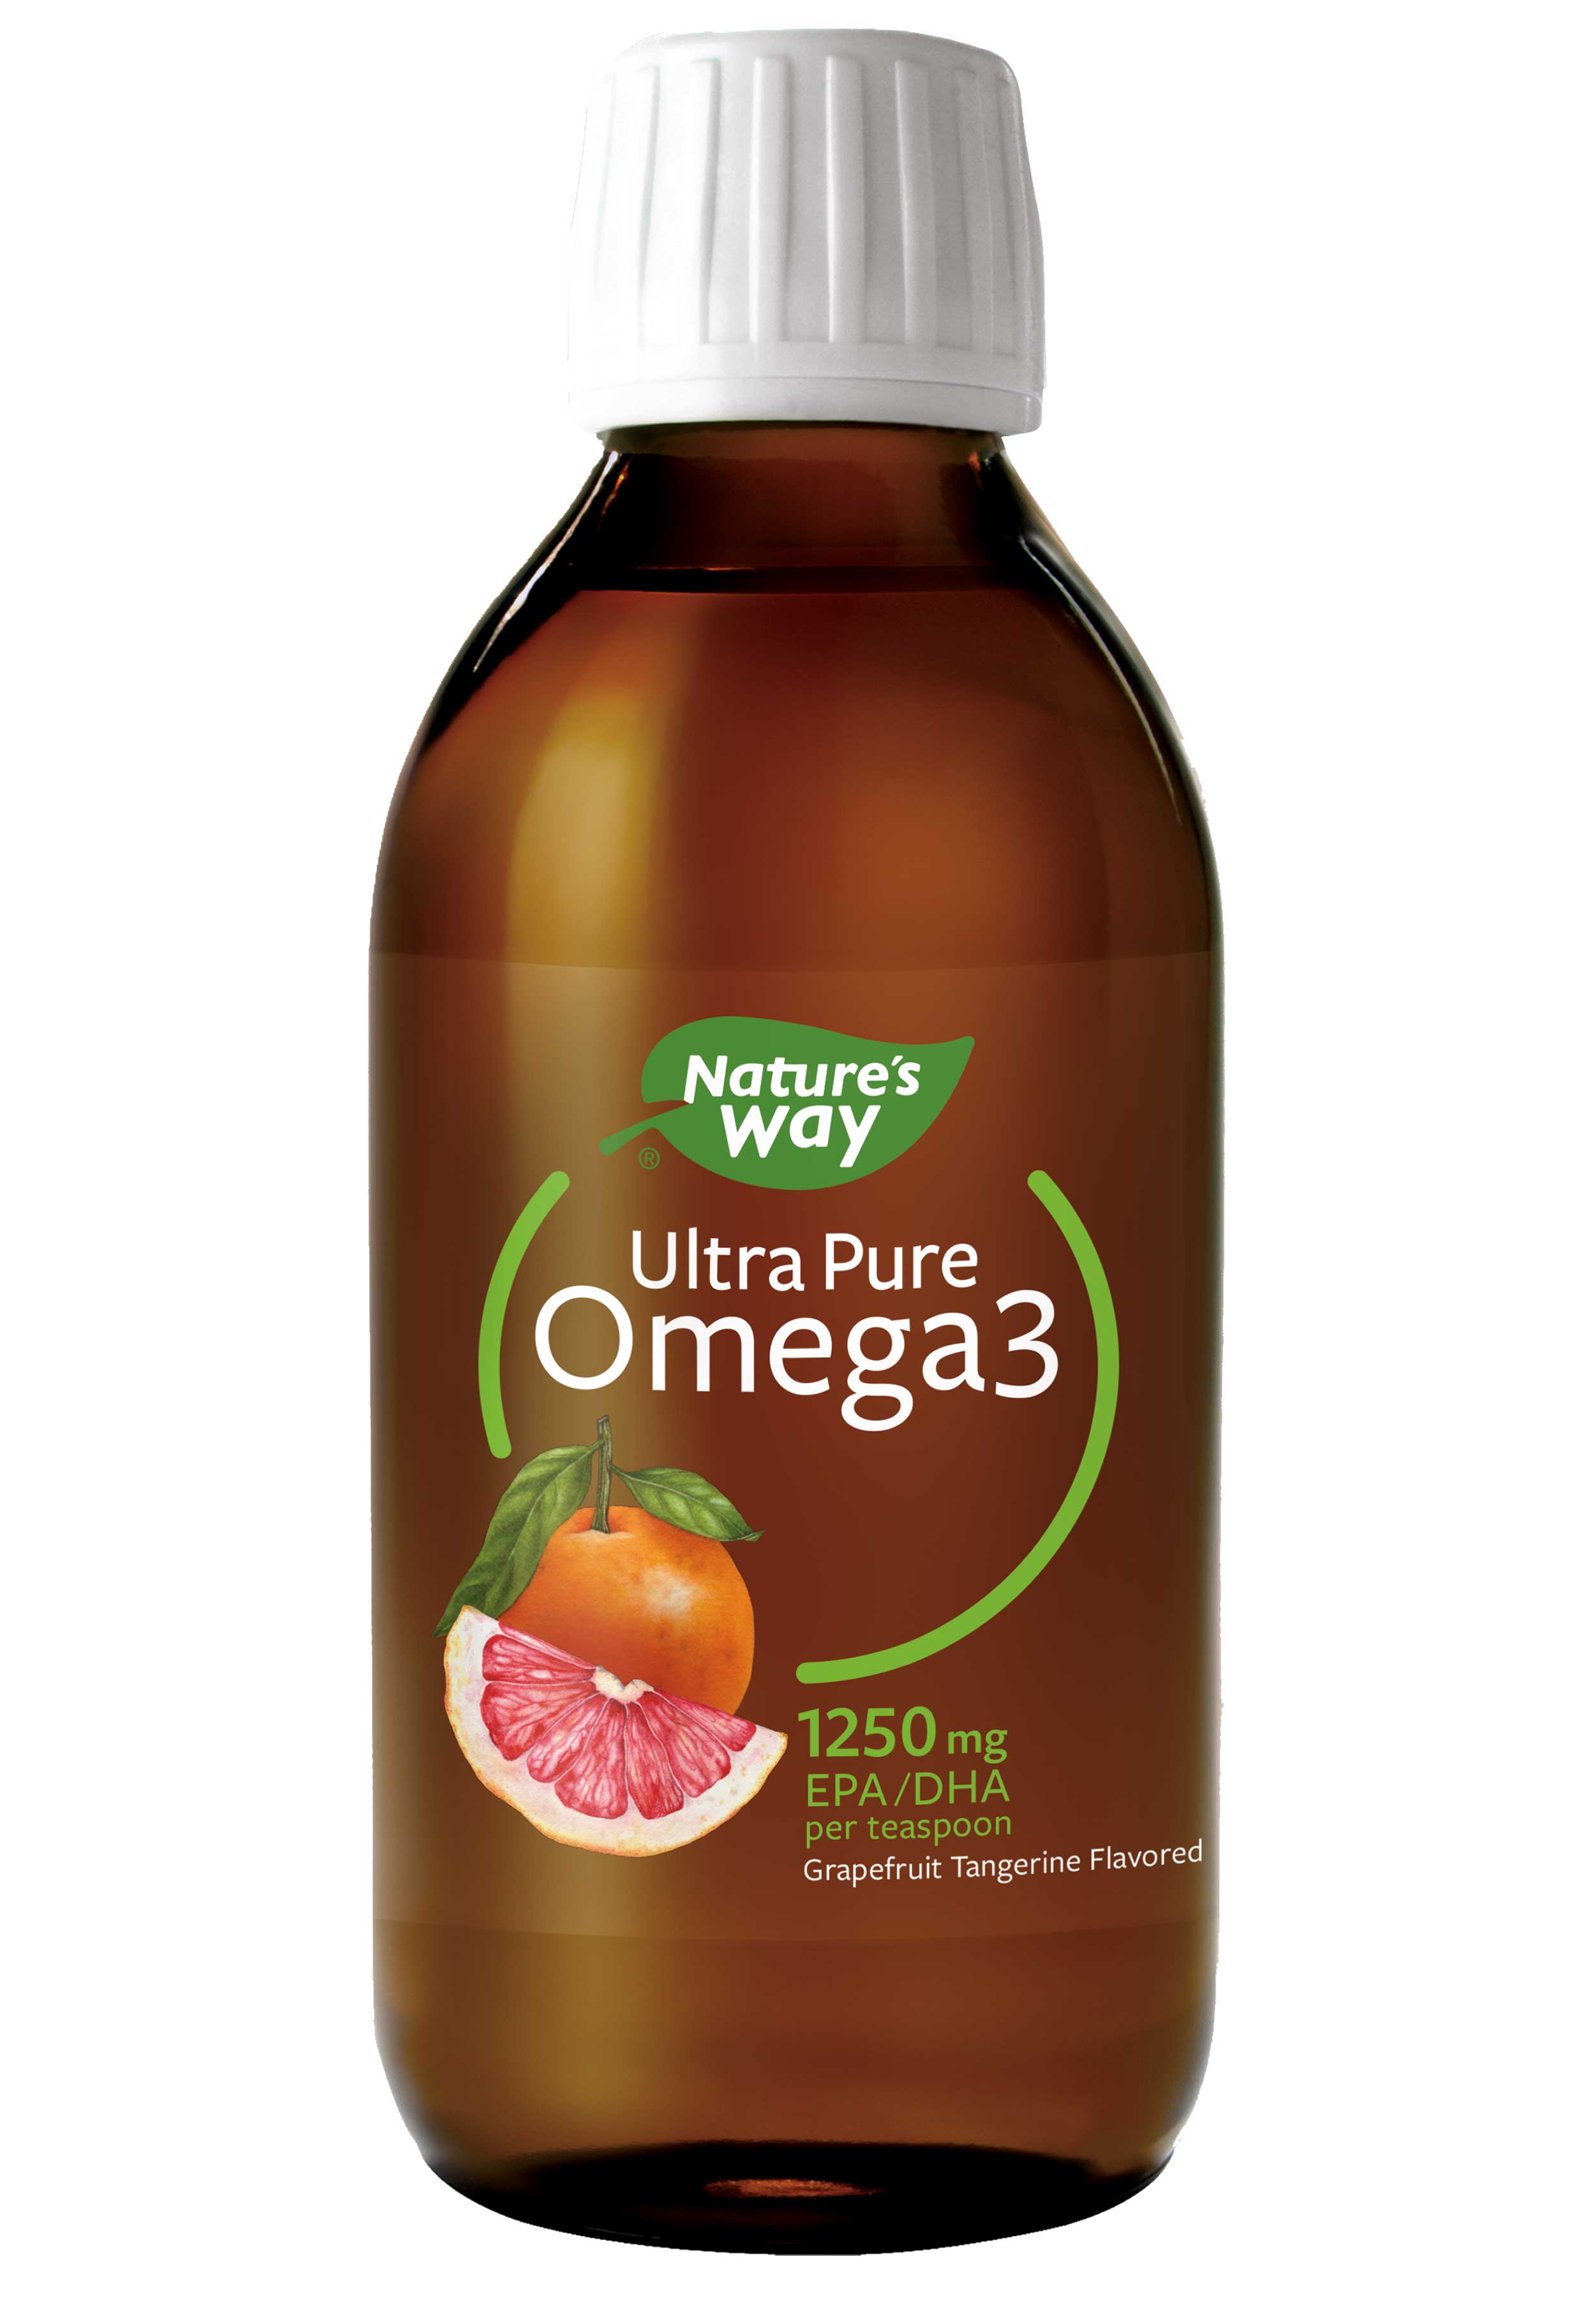 Nature's Way Ultra Pure Omega3, Grapefruit Tangerine